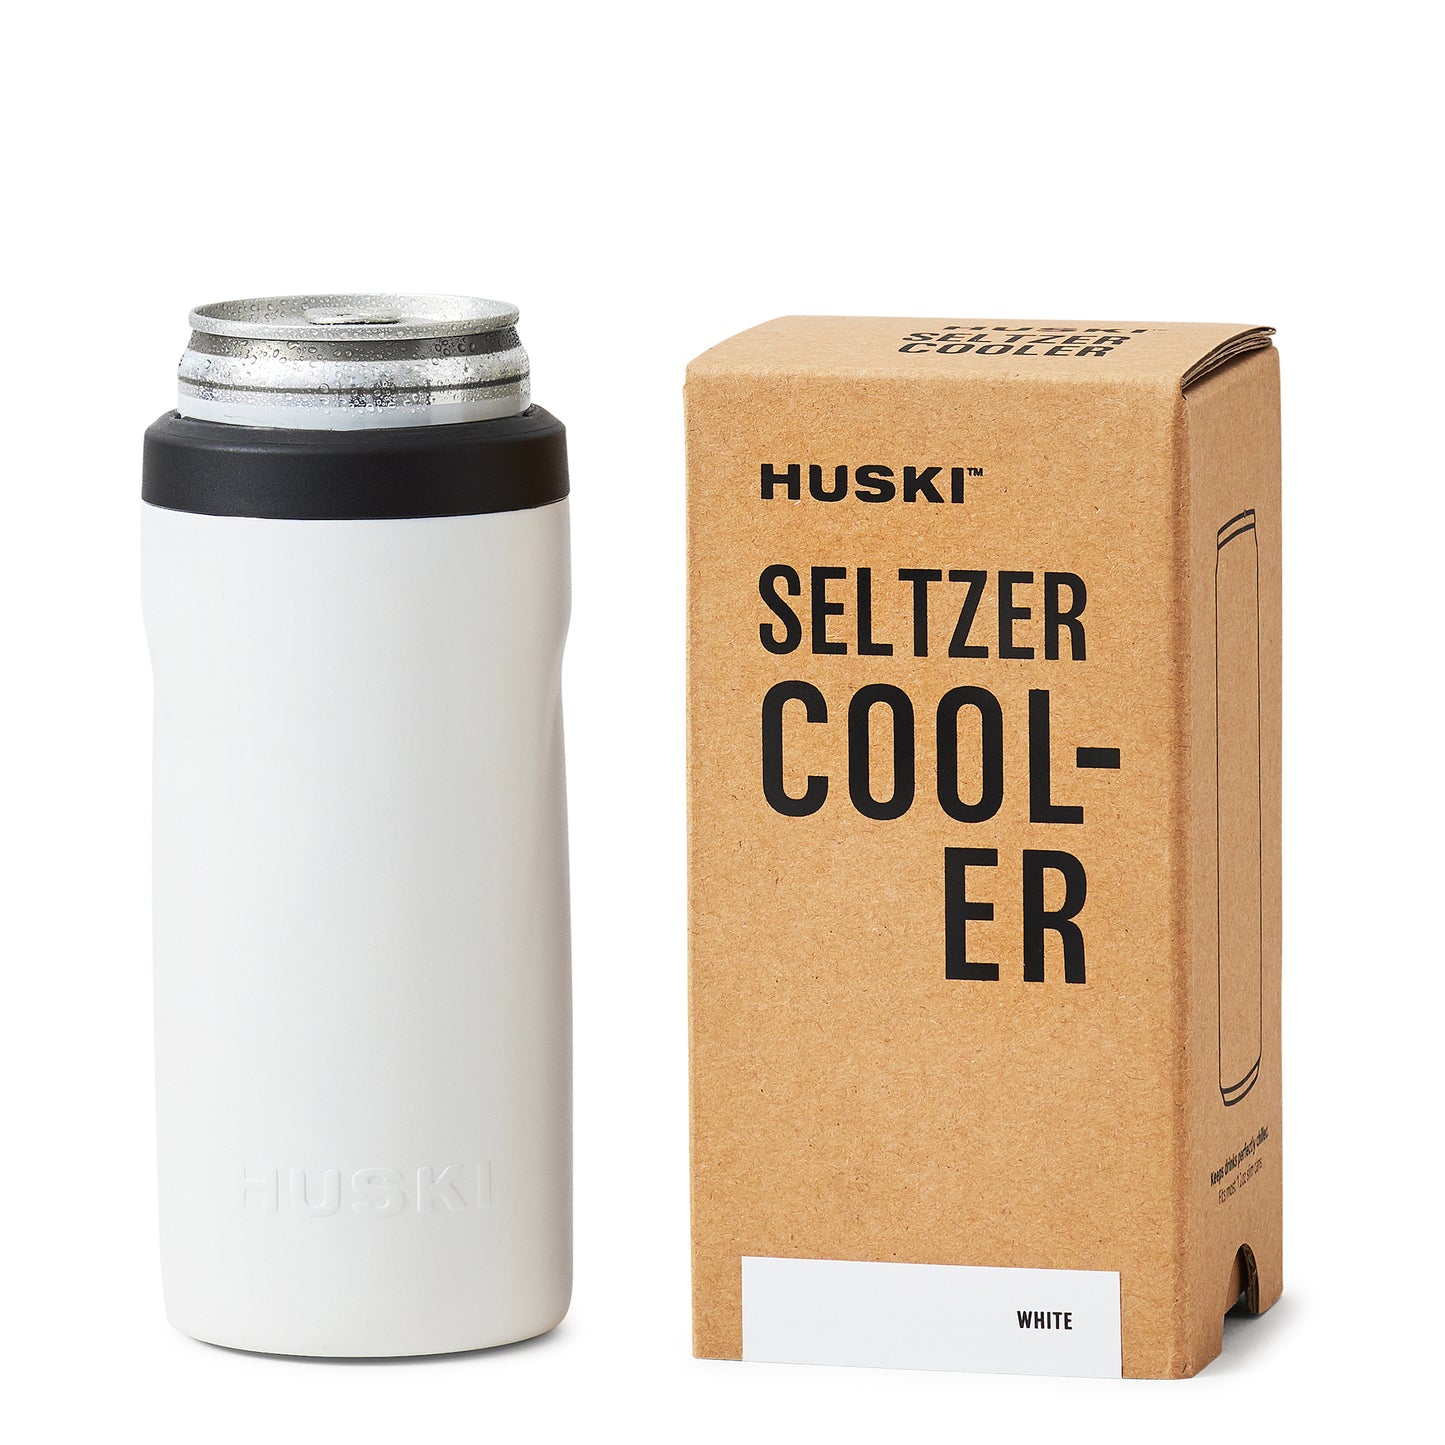 NEW: Huski Seltzer Cooler